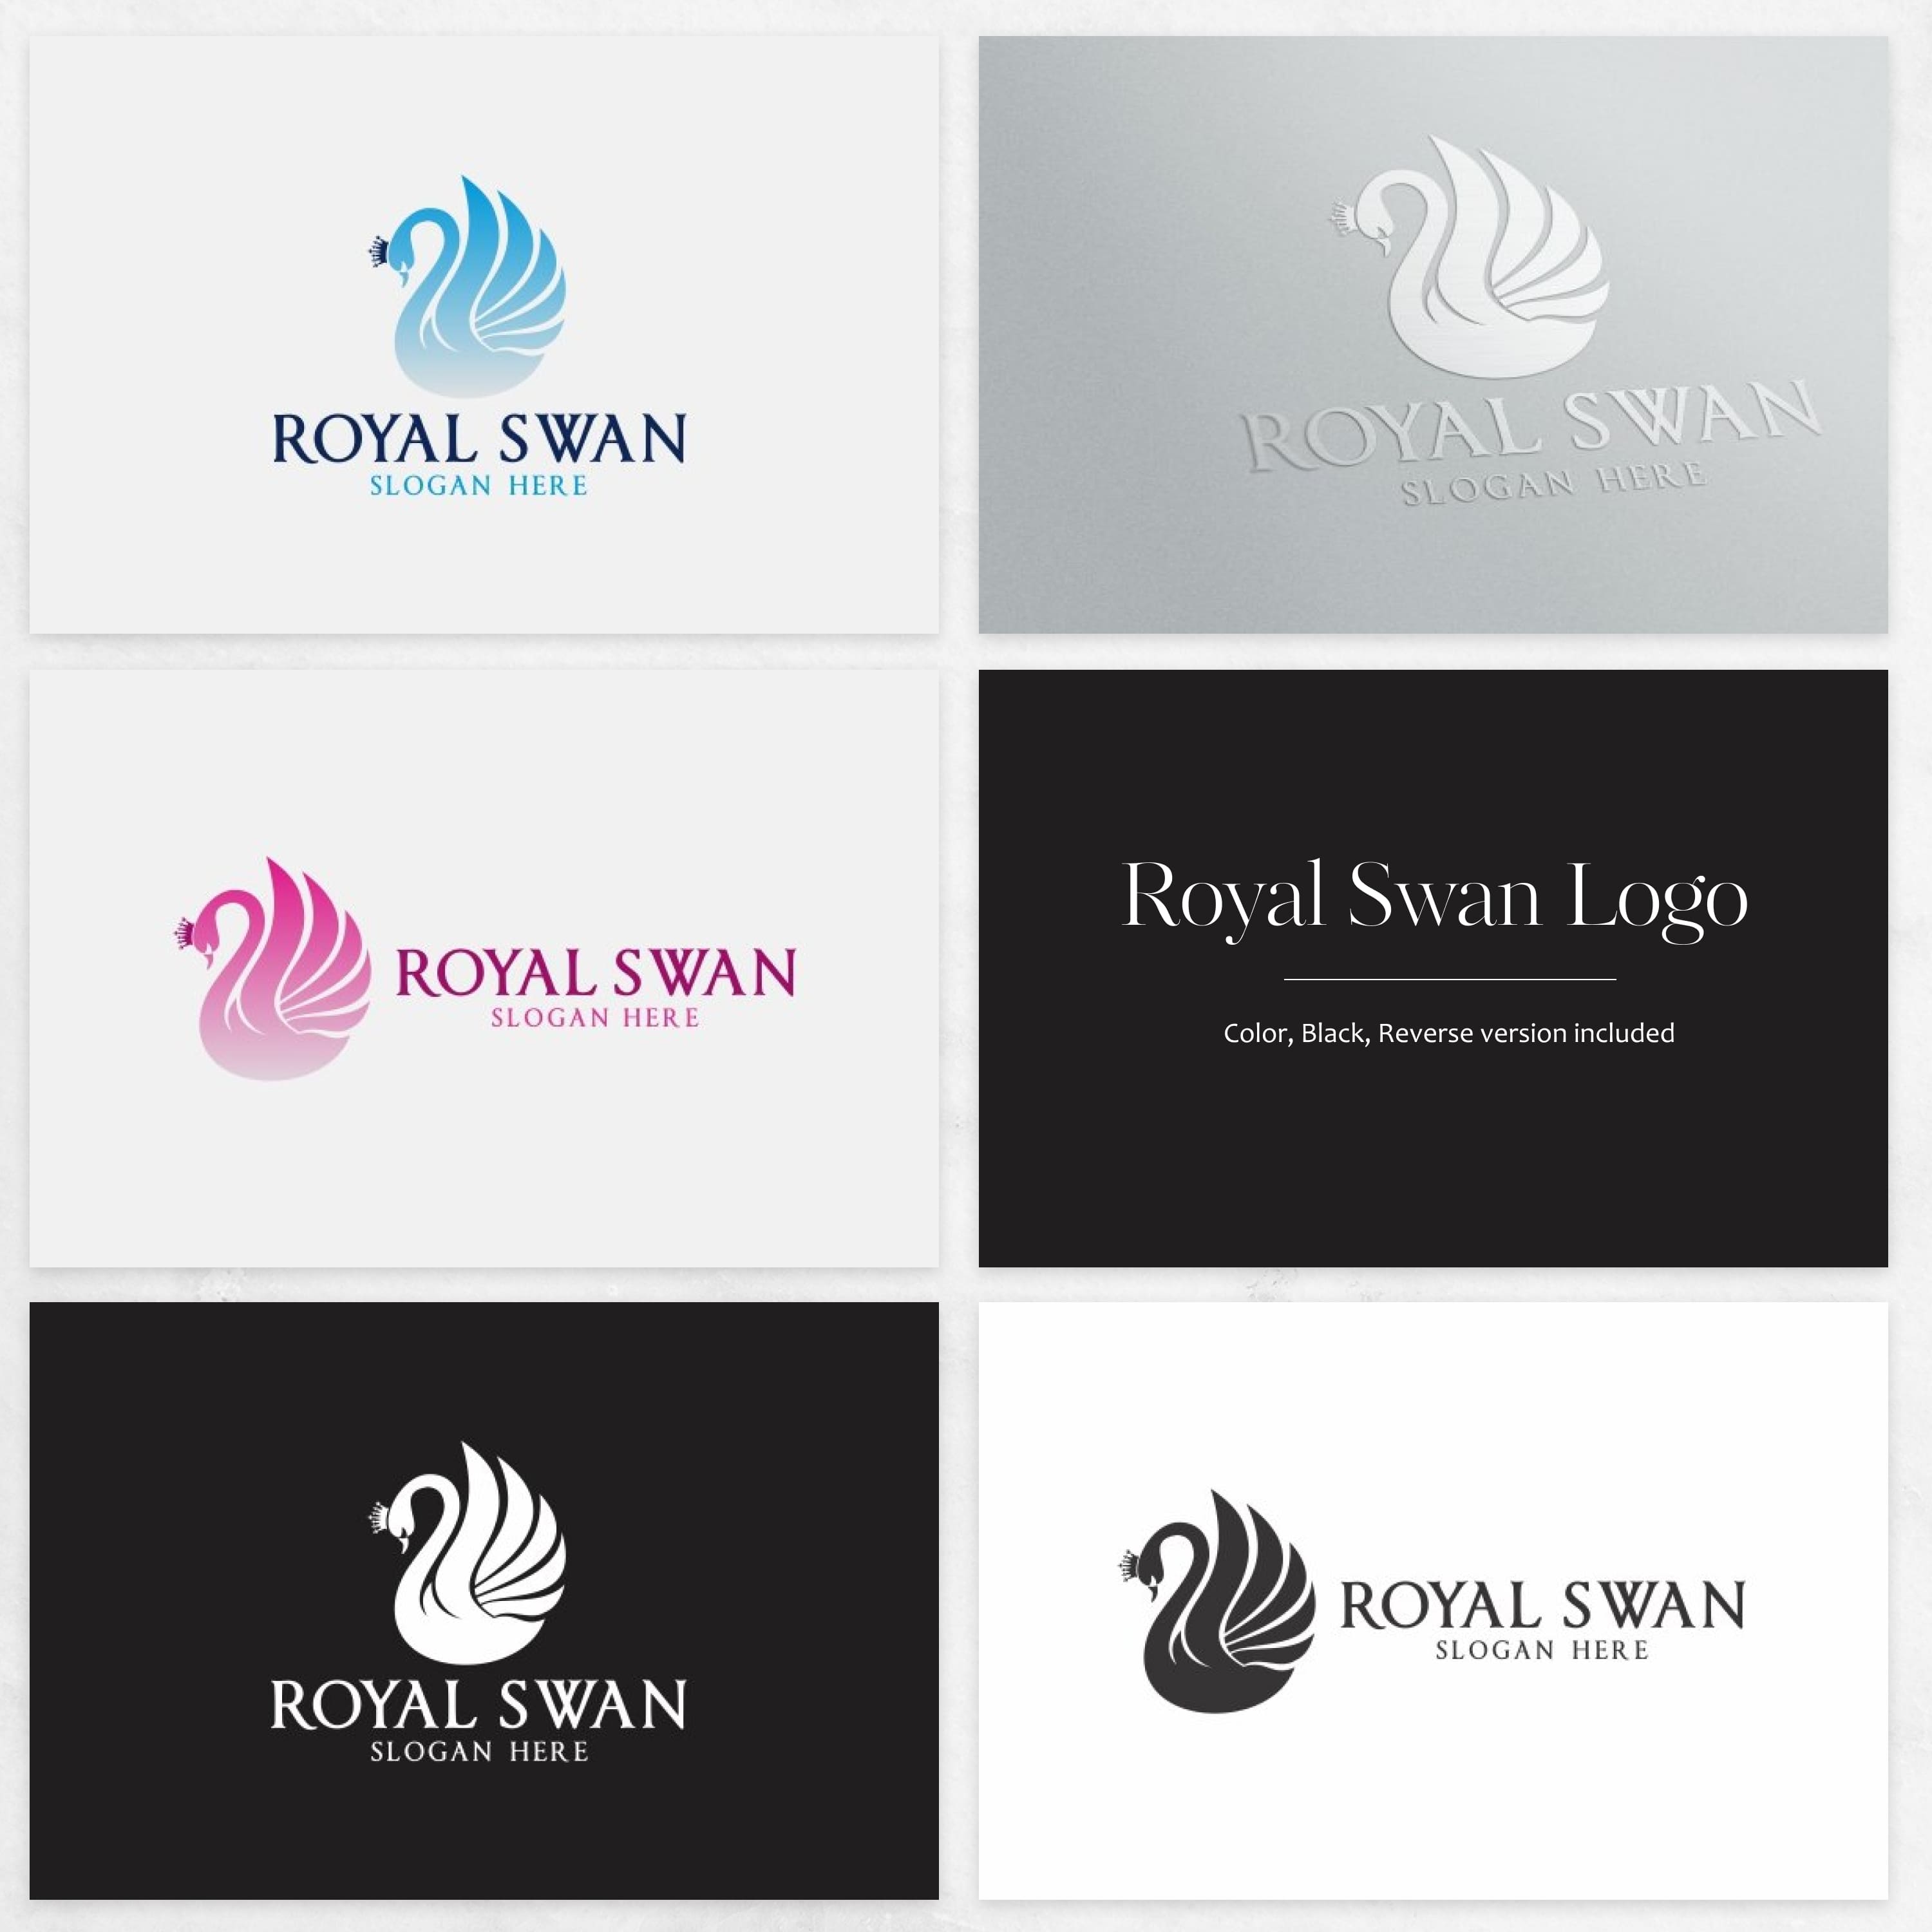 Royal Swan Logo cover.